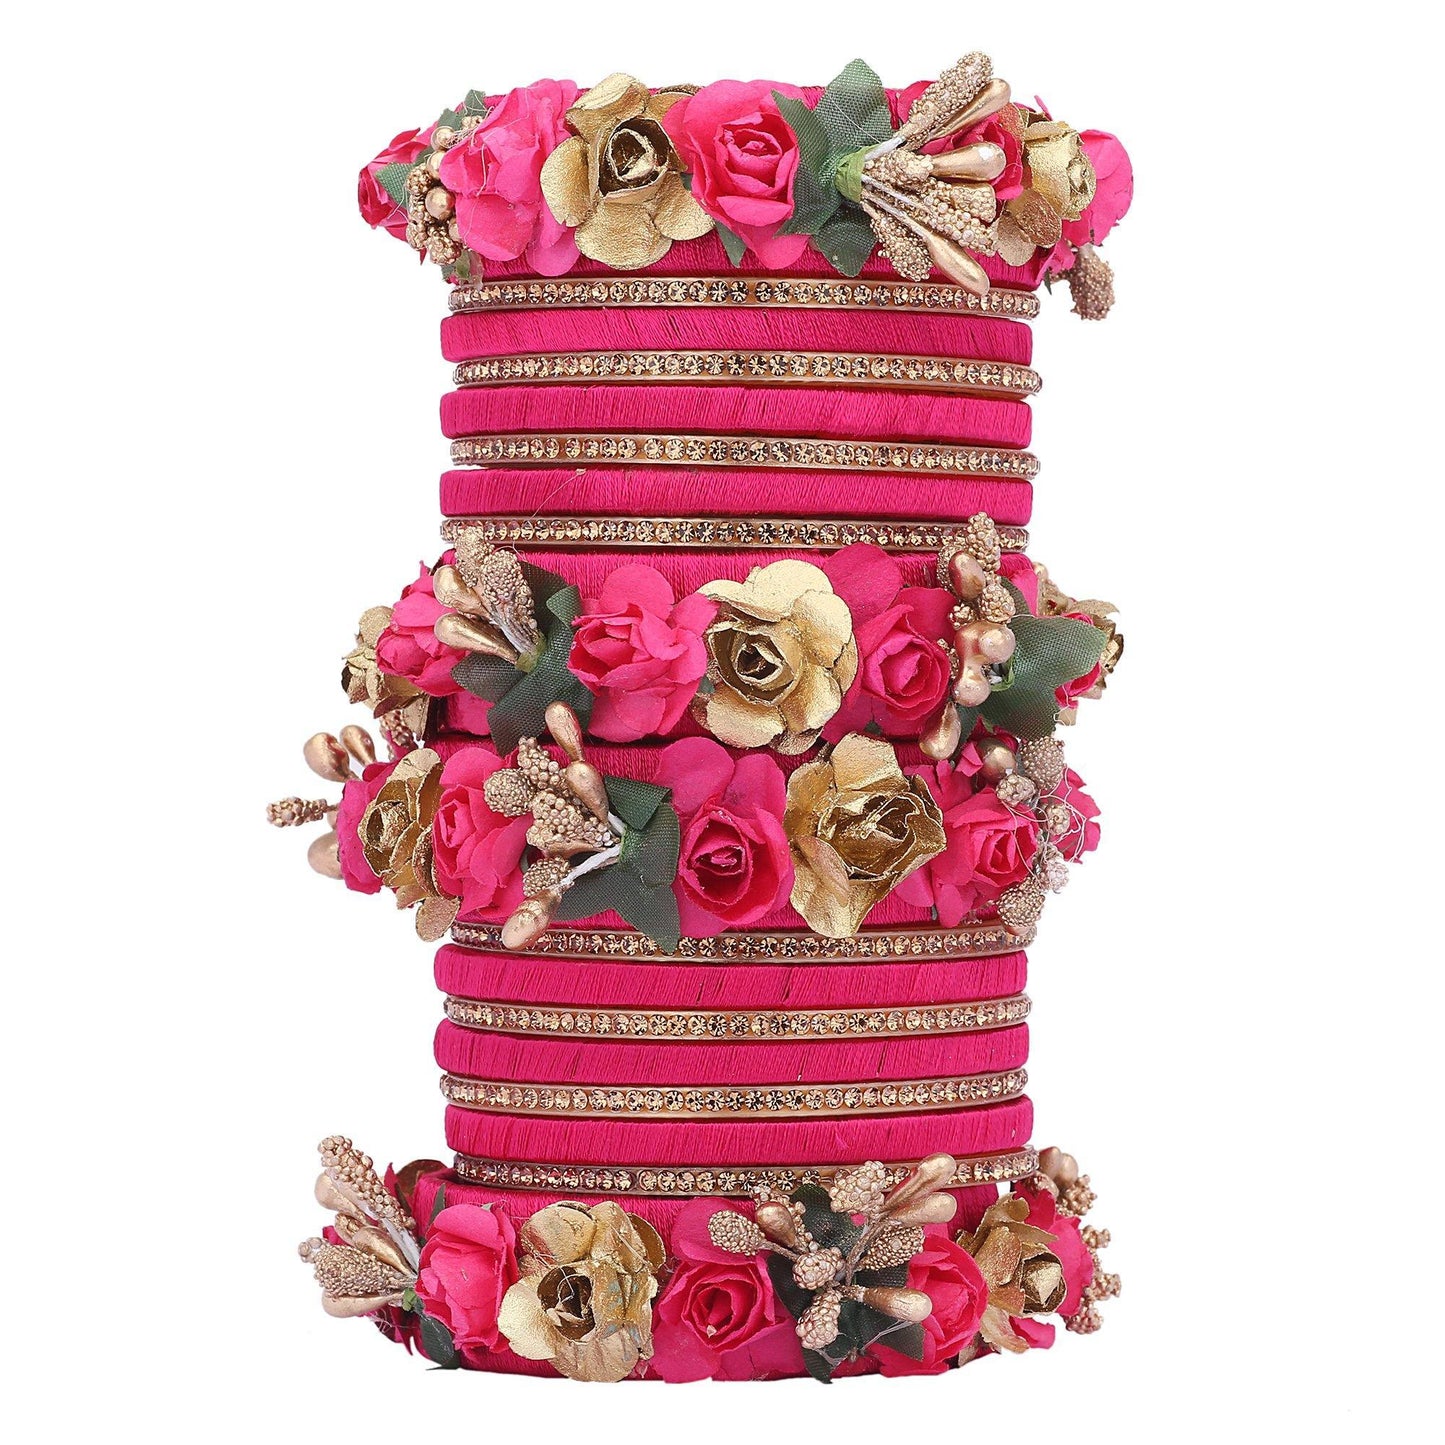 sukriti stylish designer party wedding wear flower silk thread magenta bangles for girls & women – set of 18